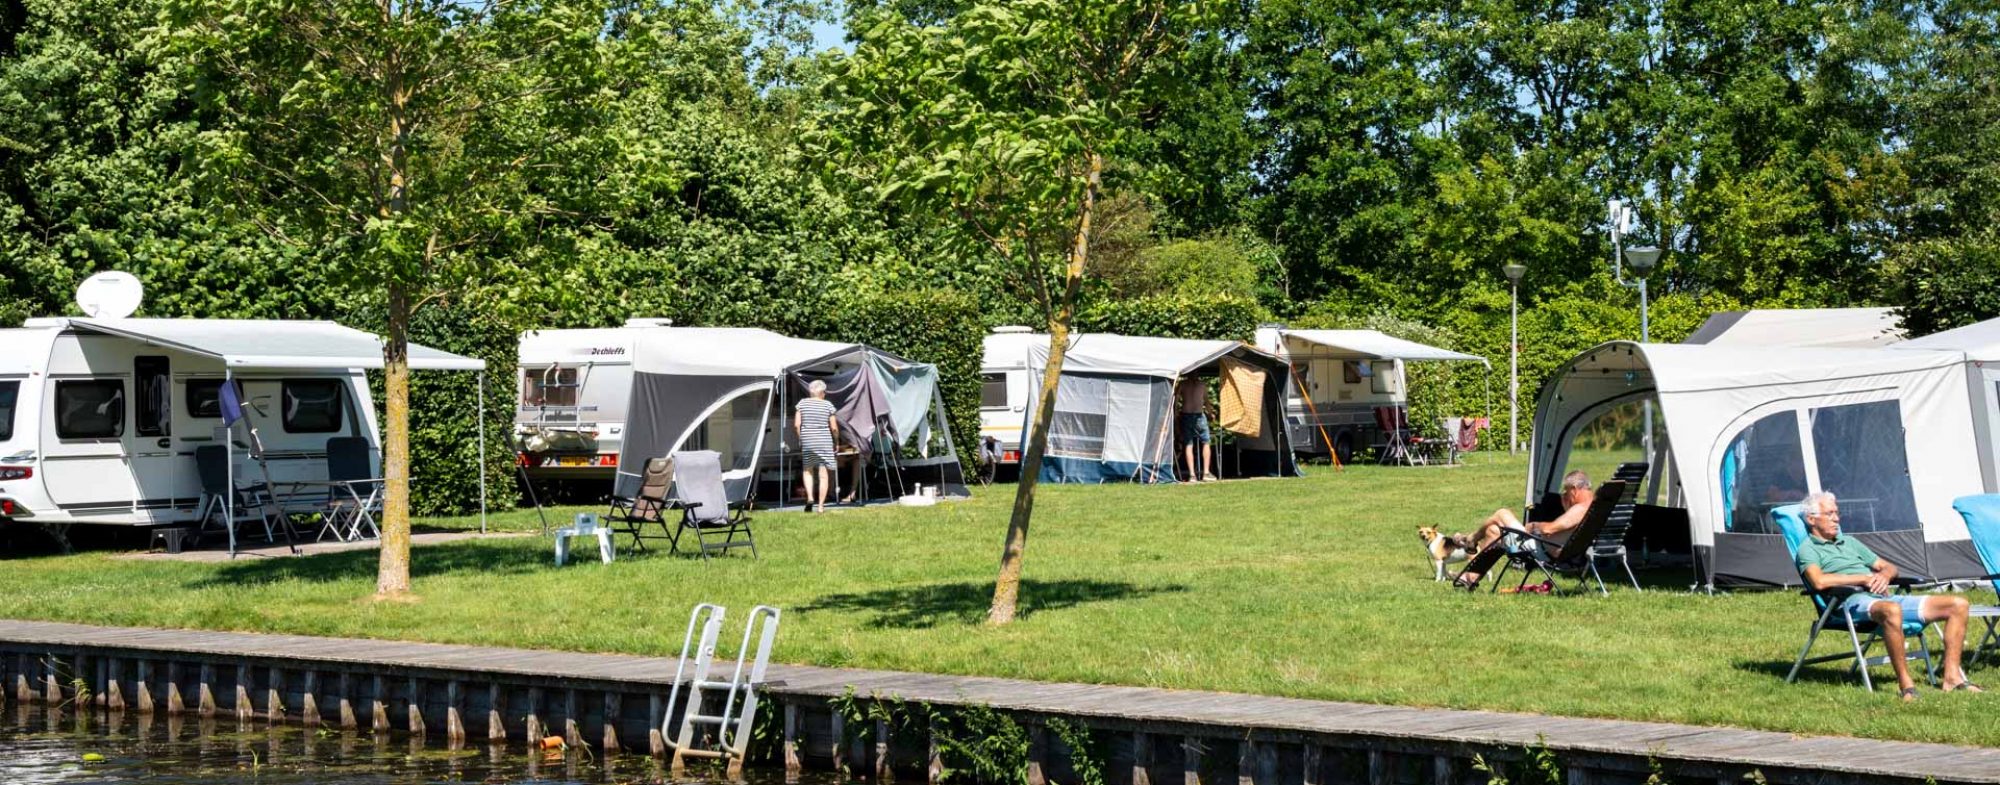 Camping aan het water in Friesland